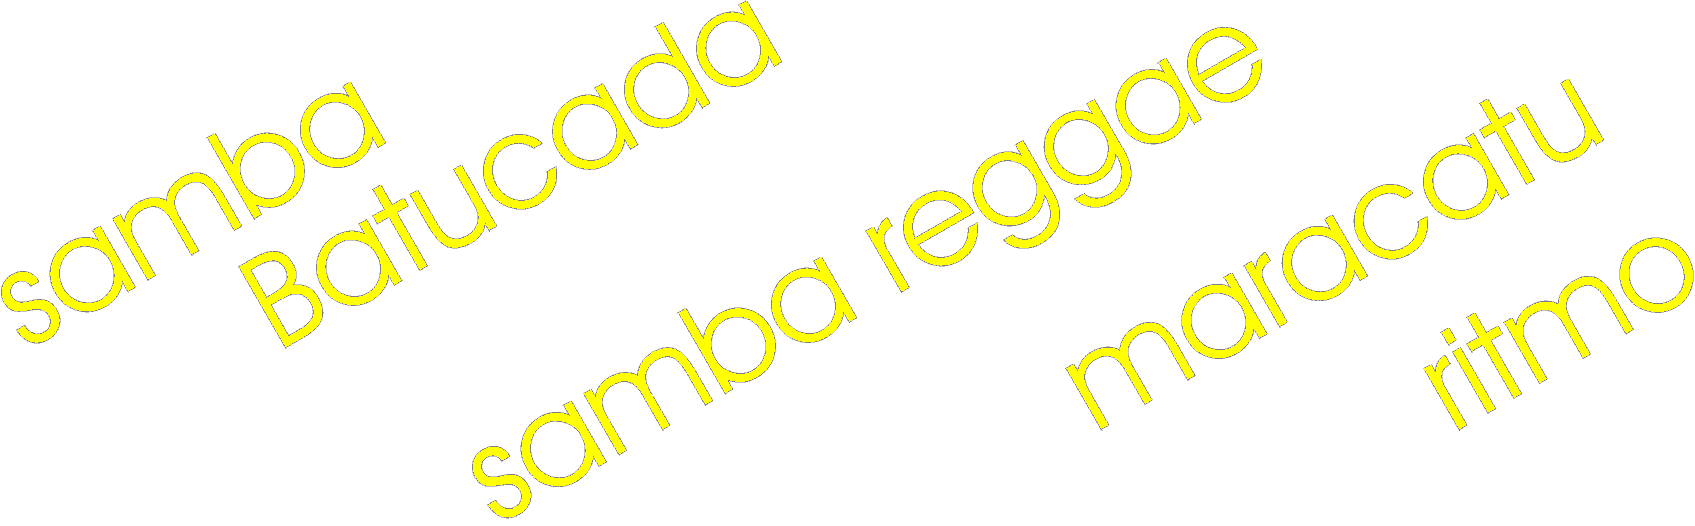 Samba Batucada, Sambareggae, Maracatu, Ritmo